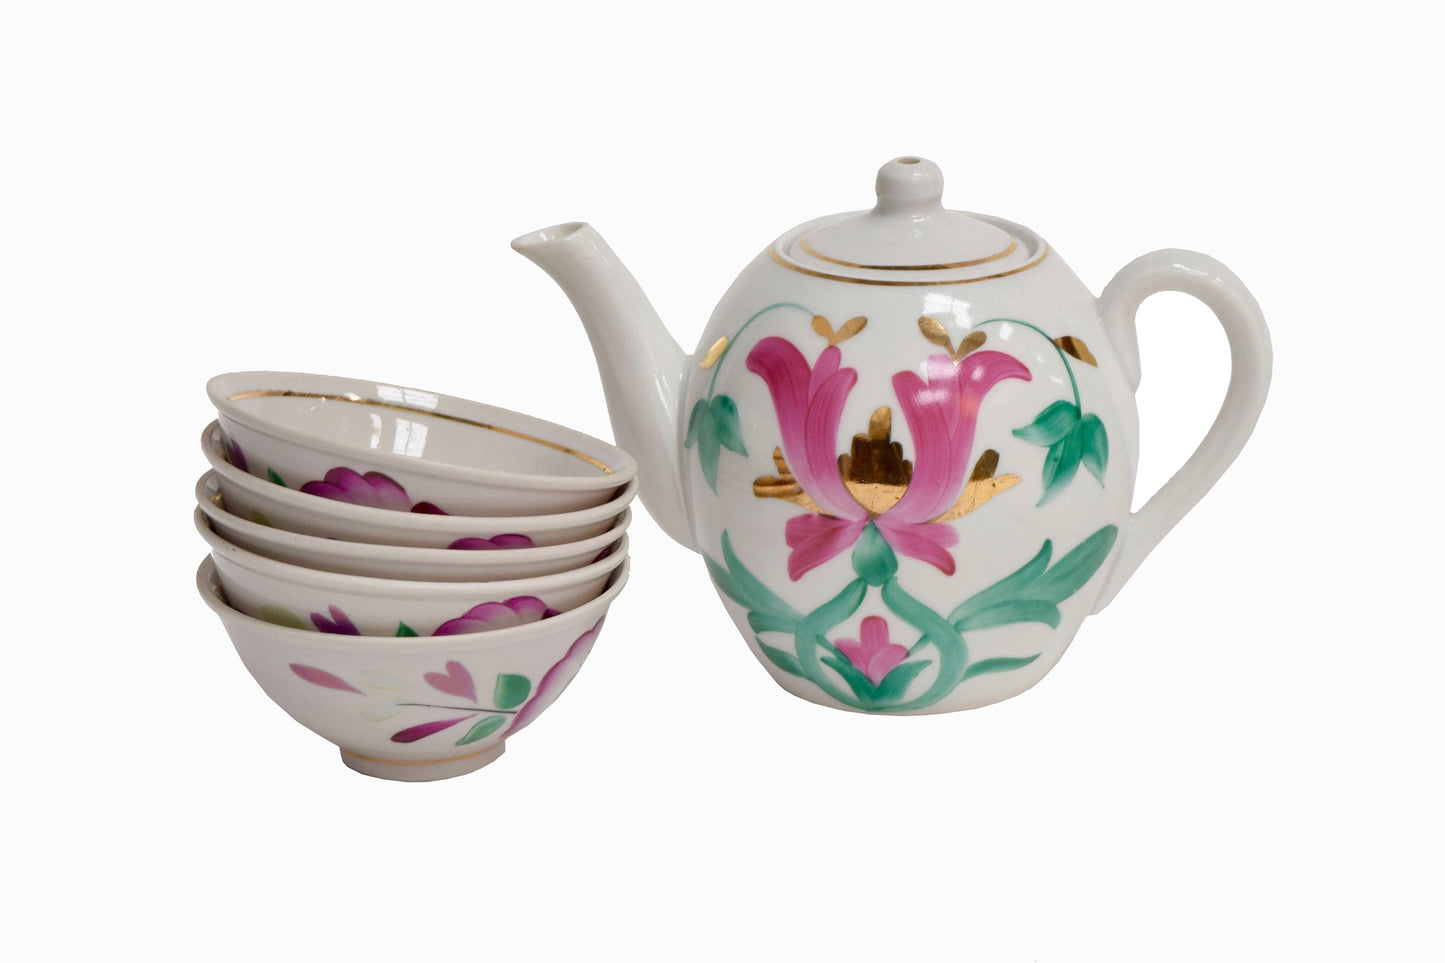 Uzbeki teapot with pink flower decoration